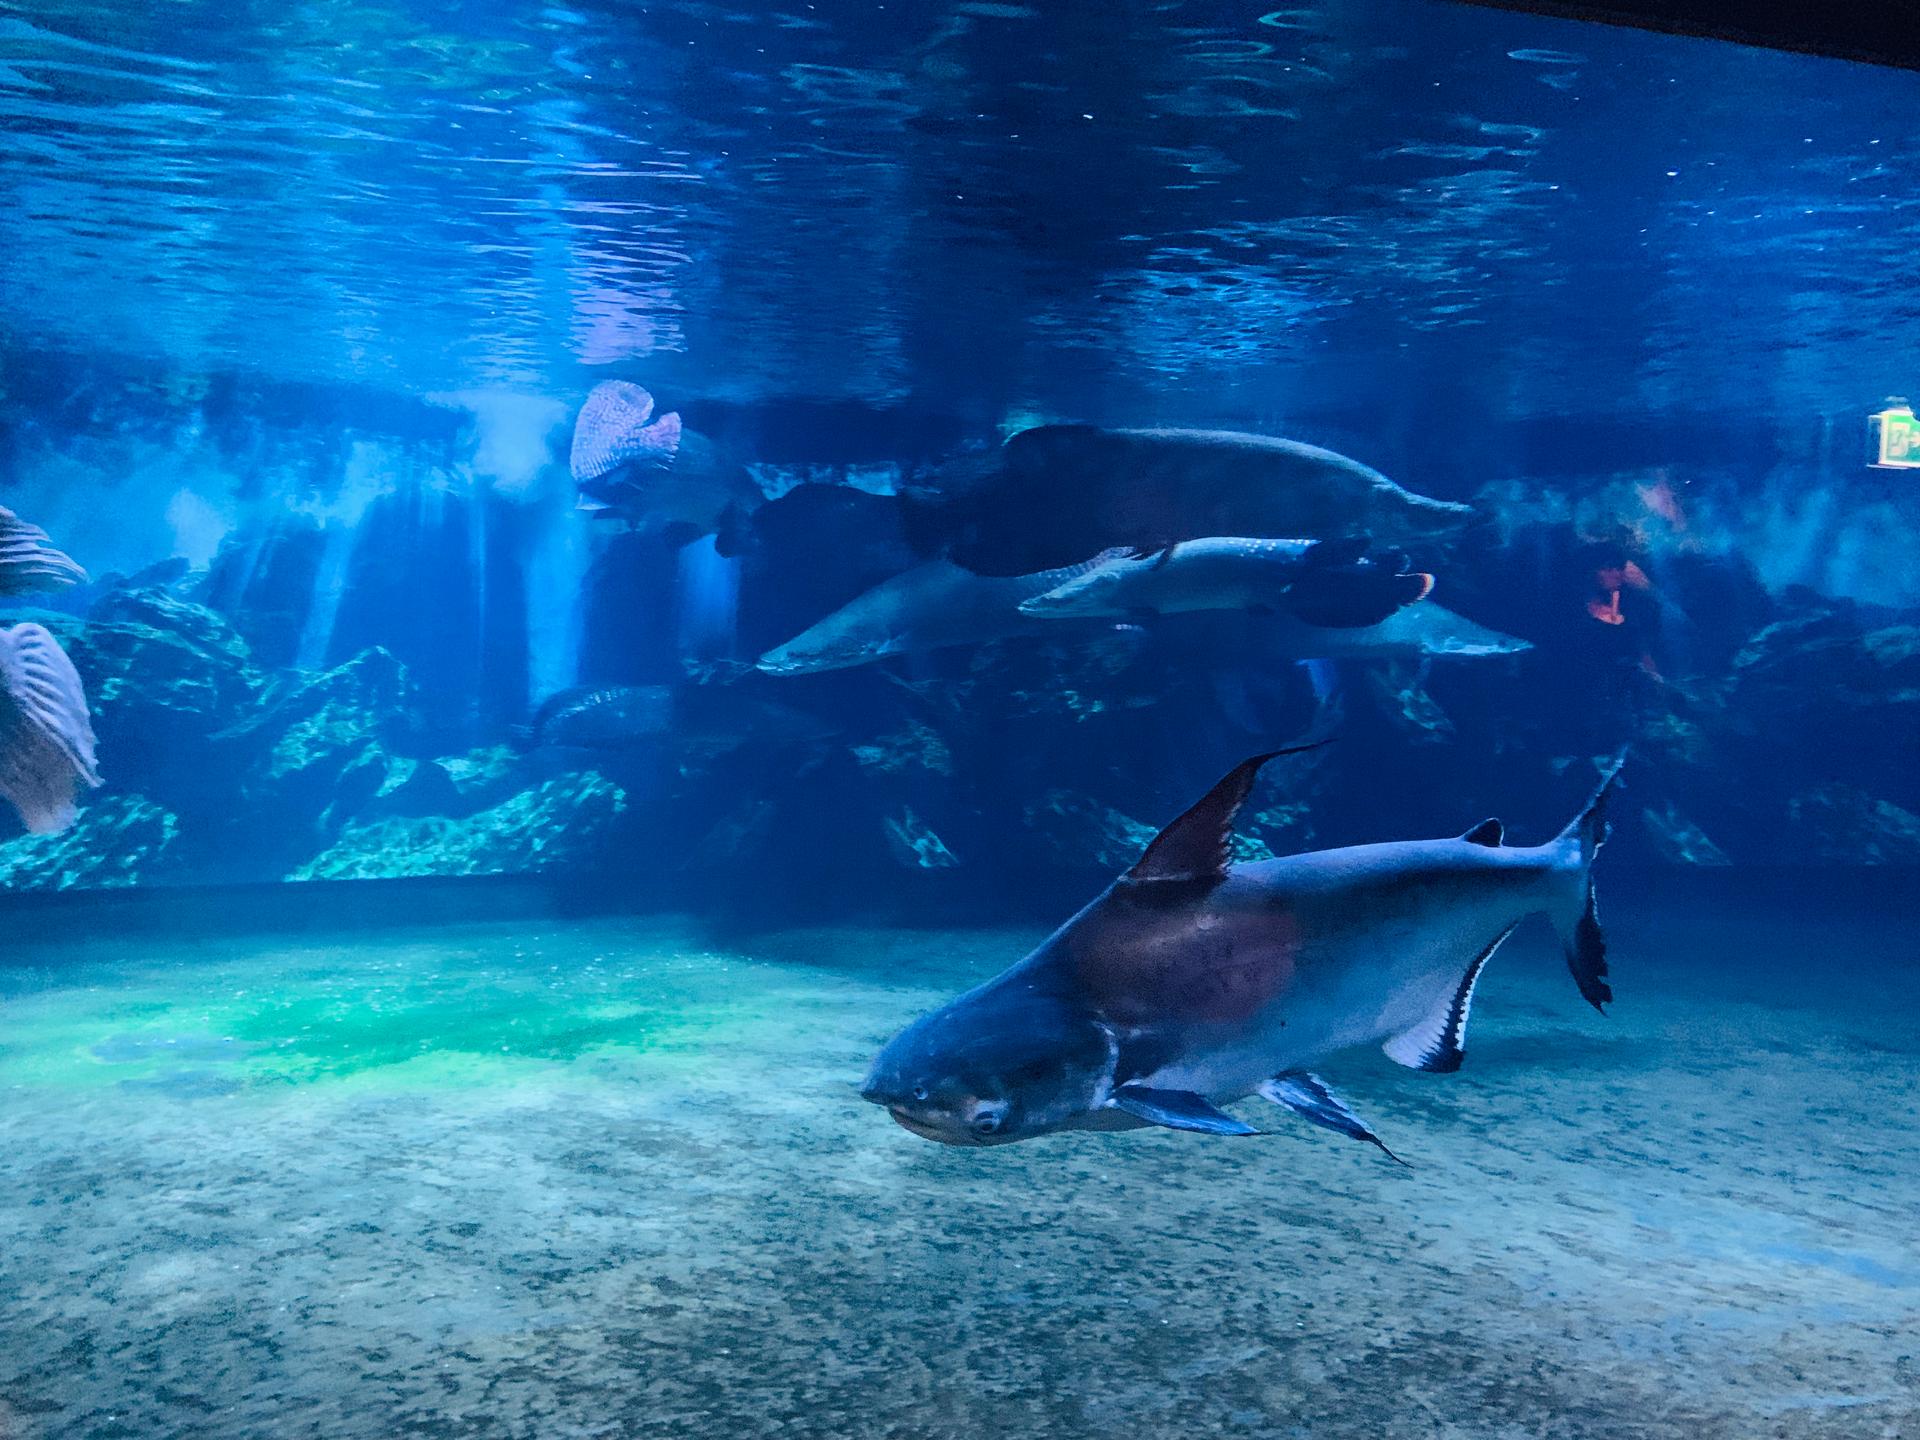 Common sharks swimming in blue water at Coex Aquarium in South Korea.